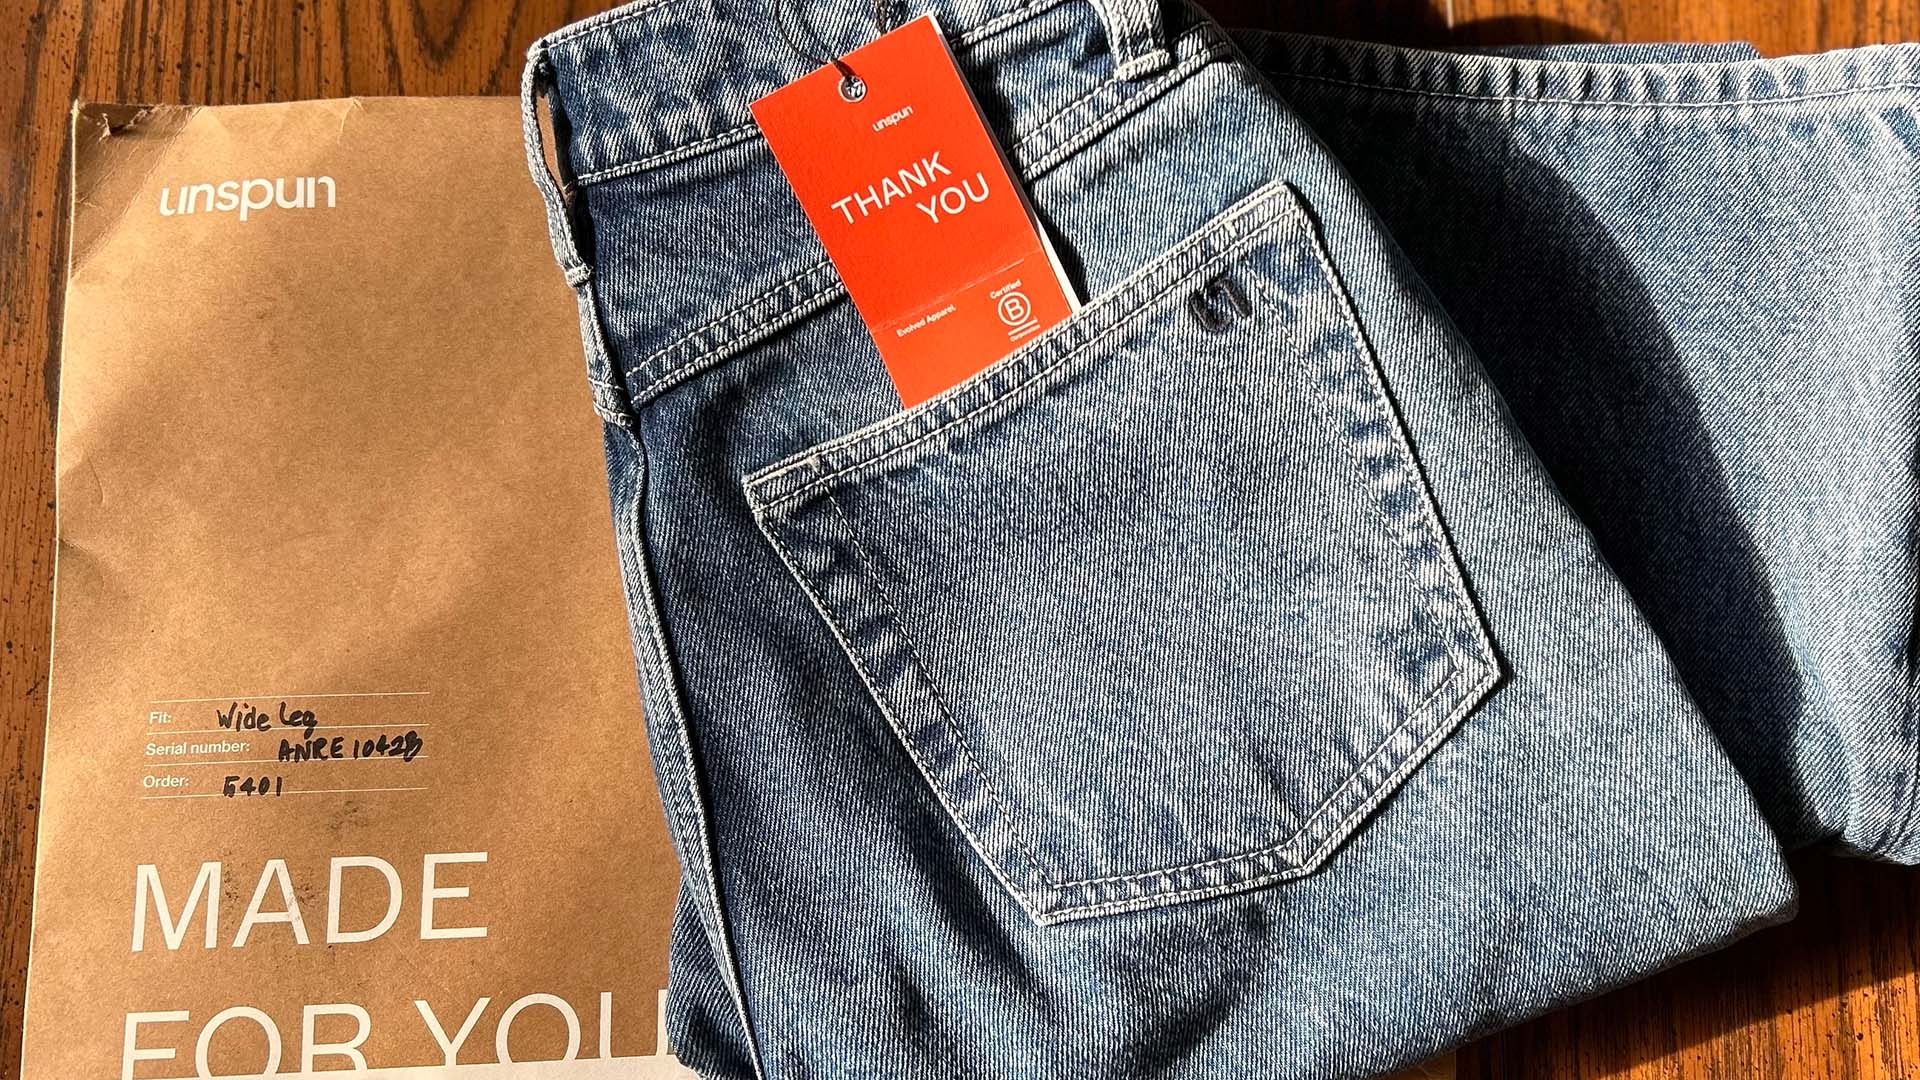 unspun jeans shipped